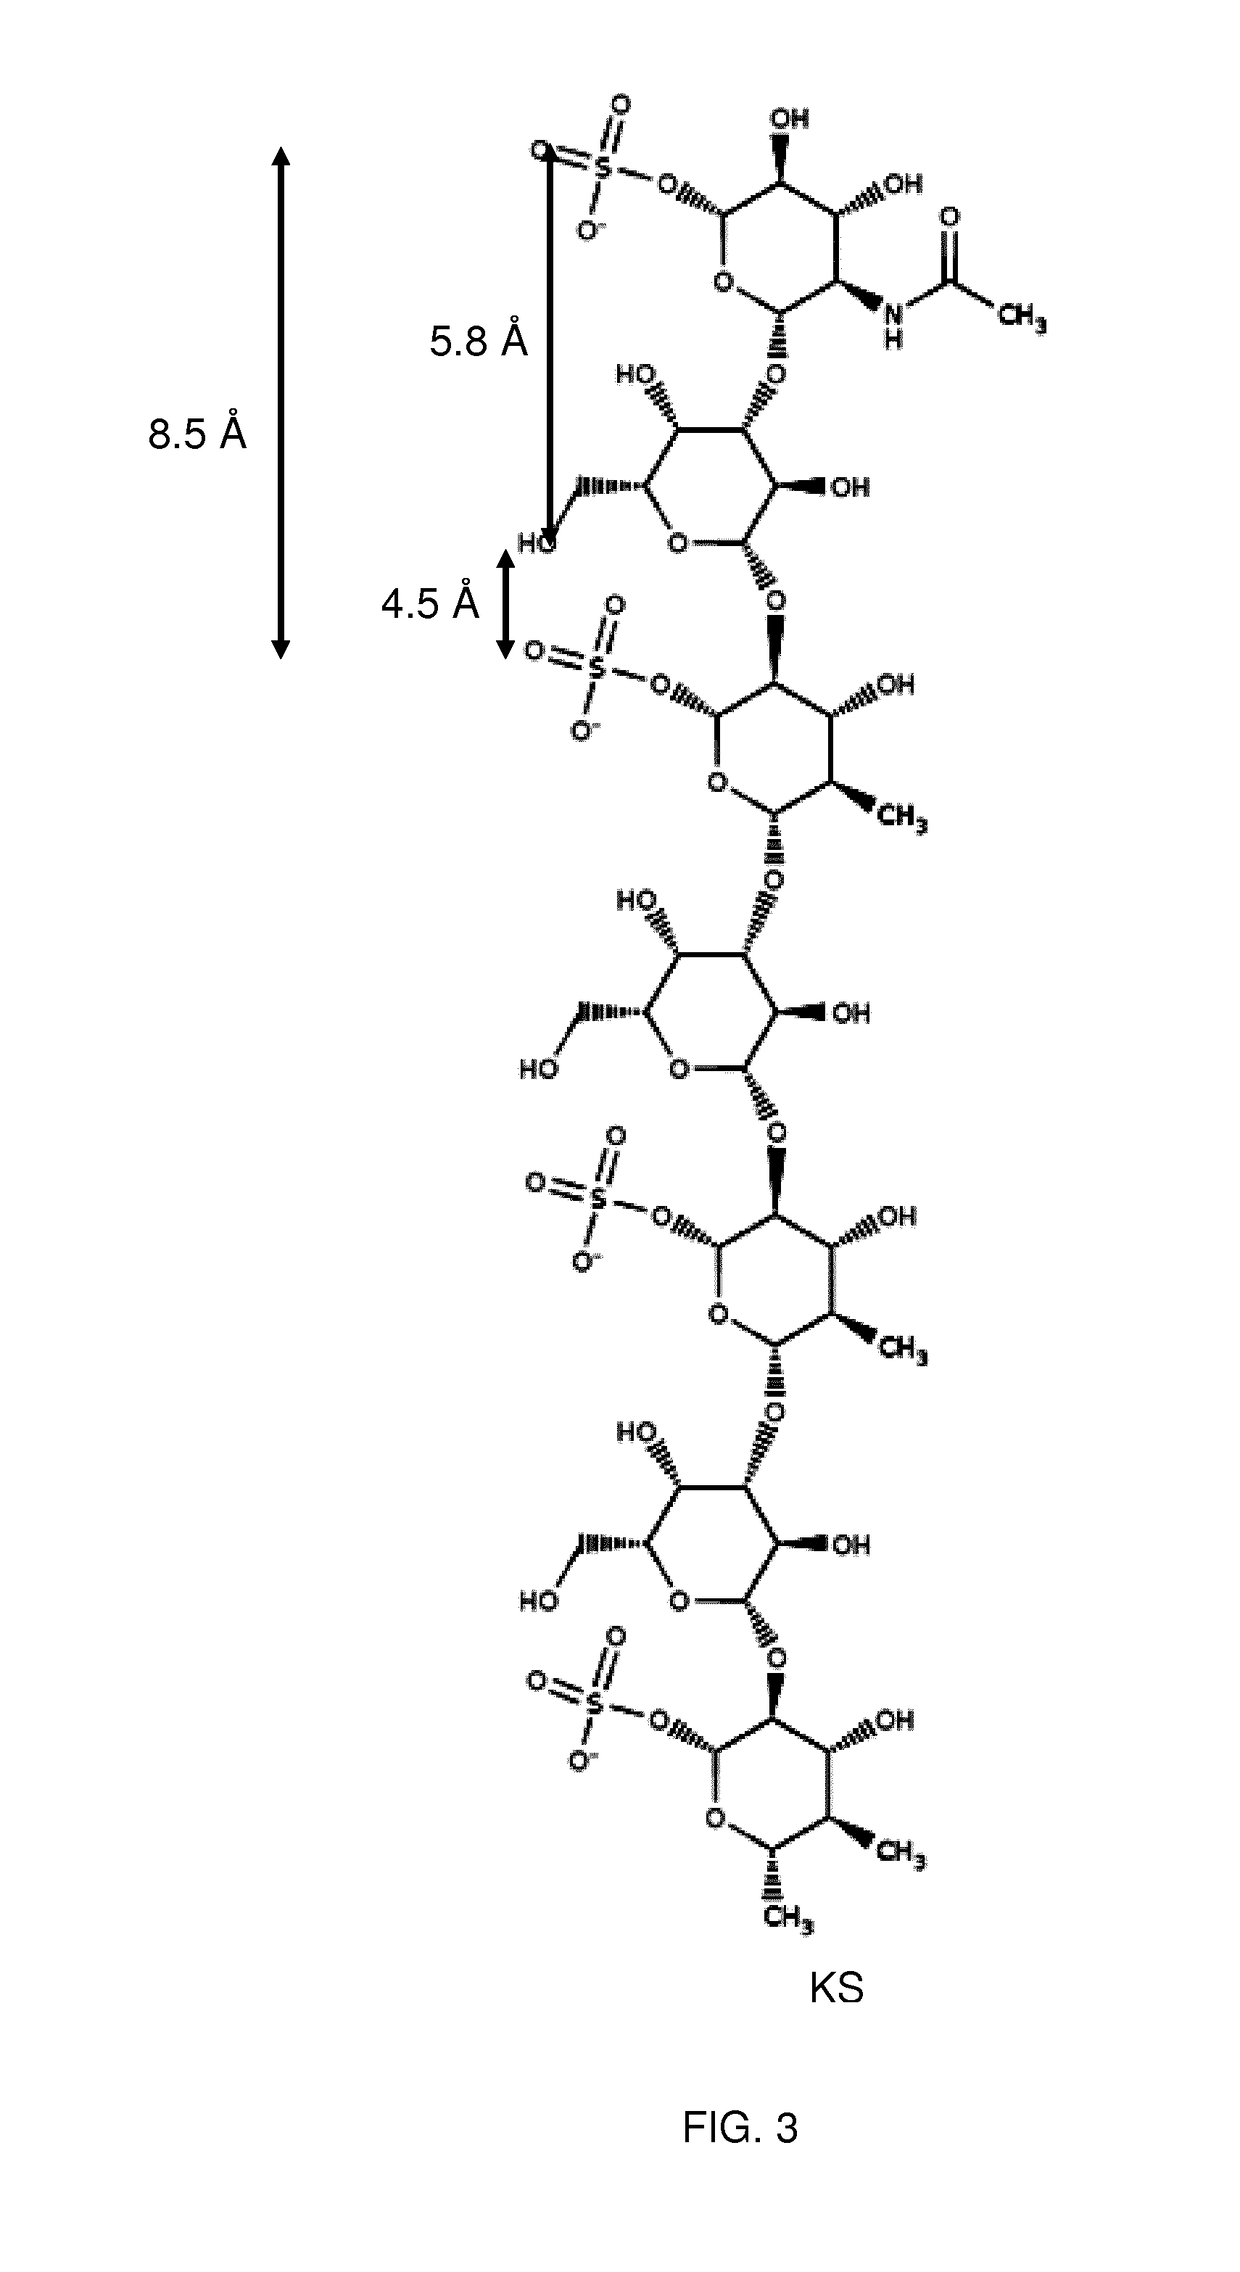 Keratan sulfate specific transporter molecules